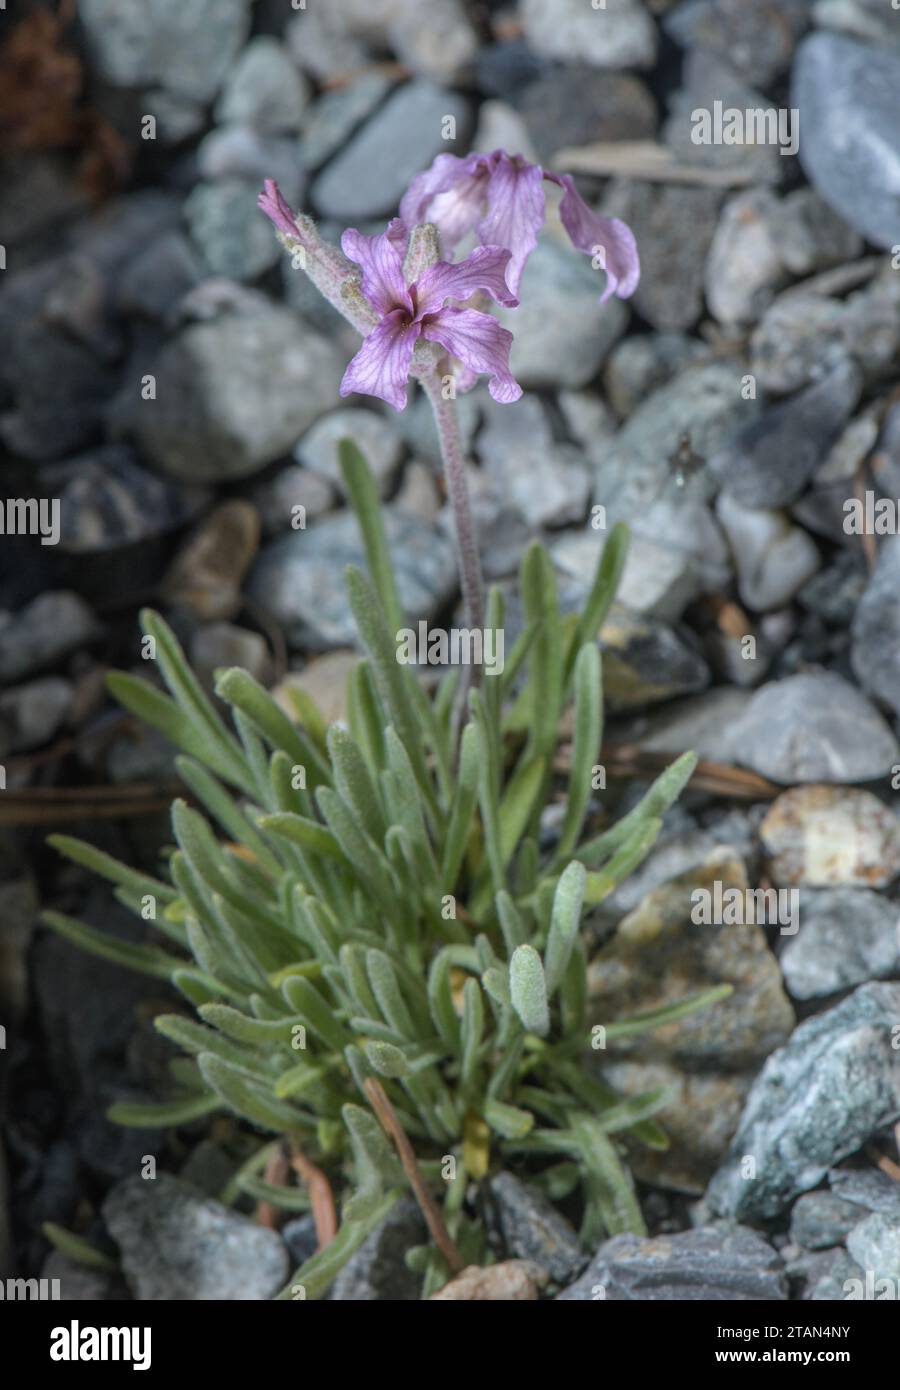 Sad Stock, Matthiola fruticulosa ssp. valesiaca (= Valais Stock, M. valesiaca) in flower in the italian Alps. Stock Photo